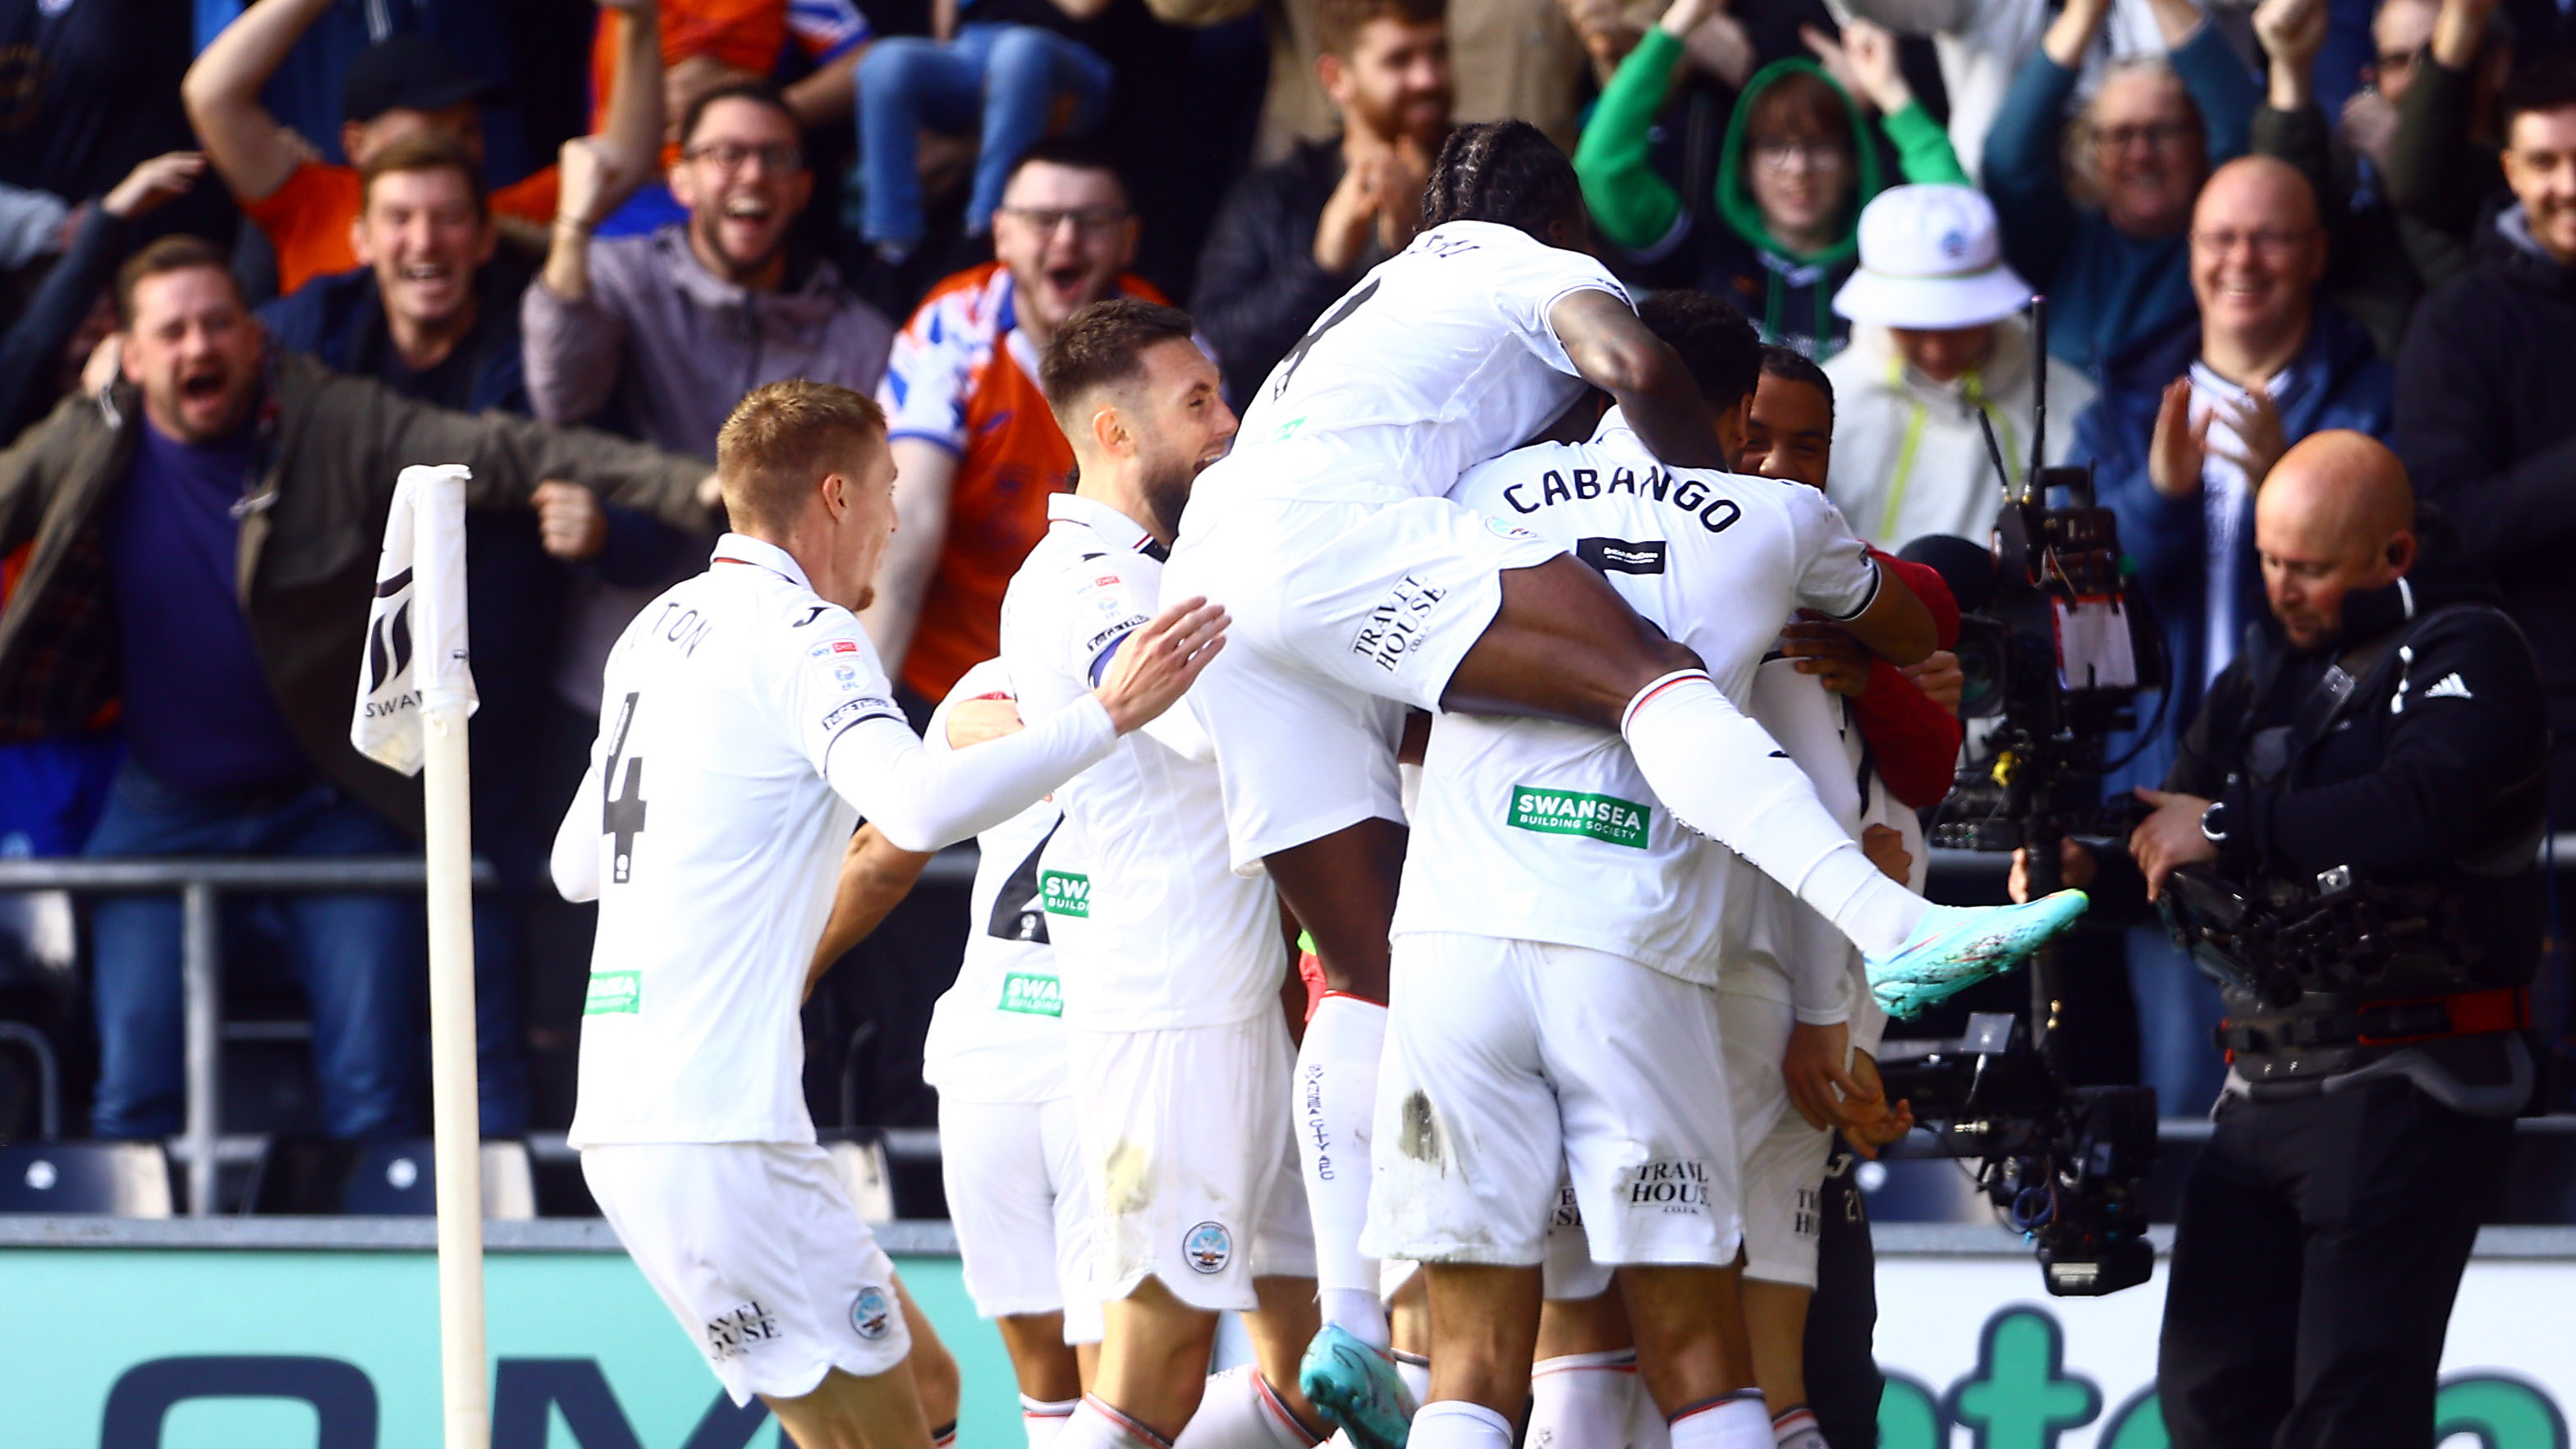 Swansea City celebrate